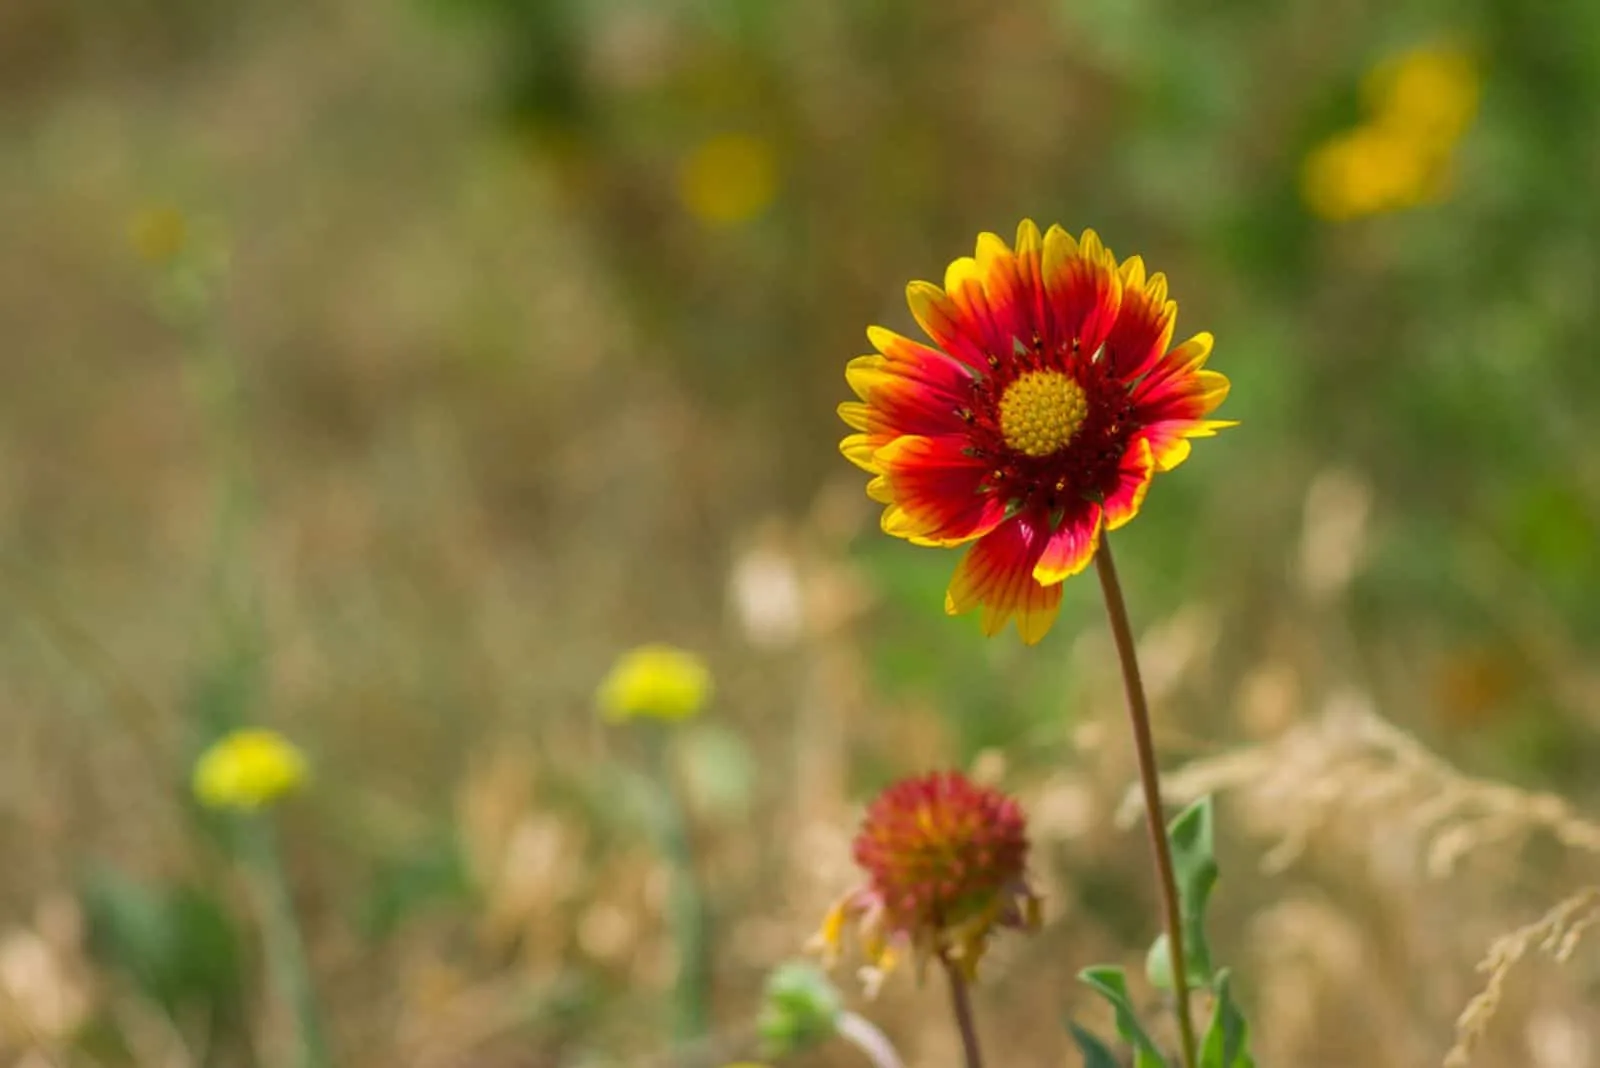 blanket flower in a summer wild field